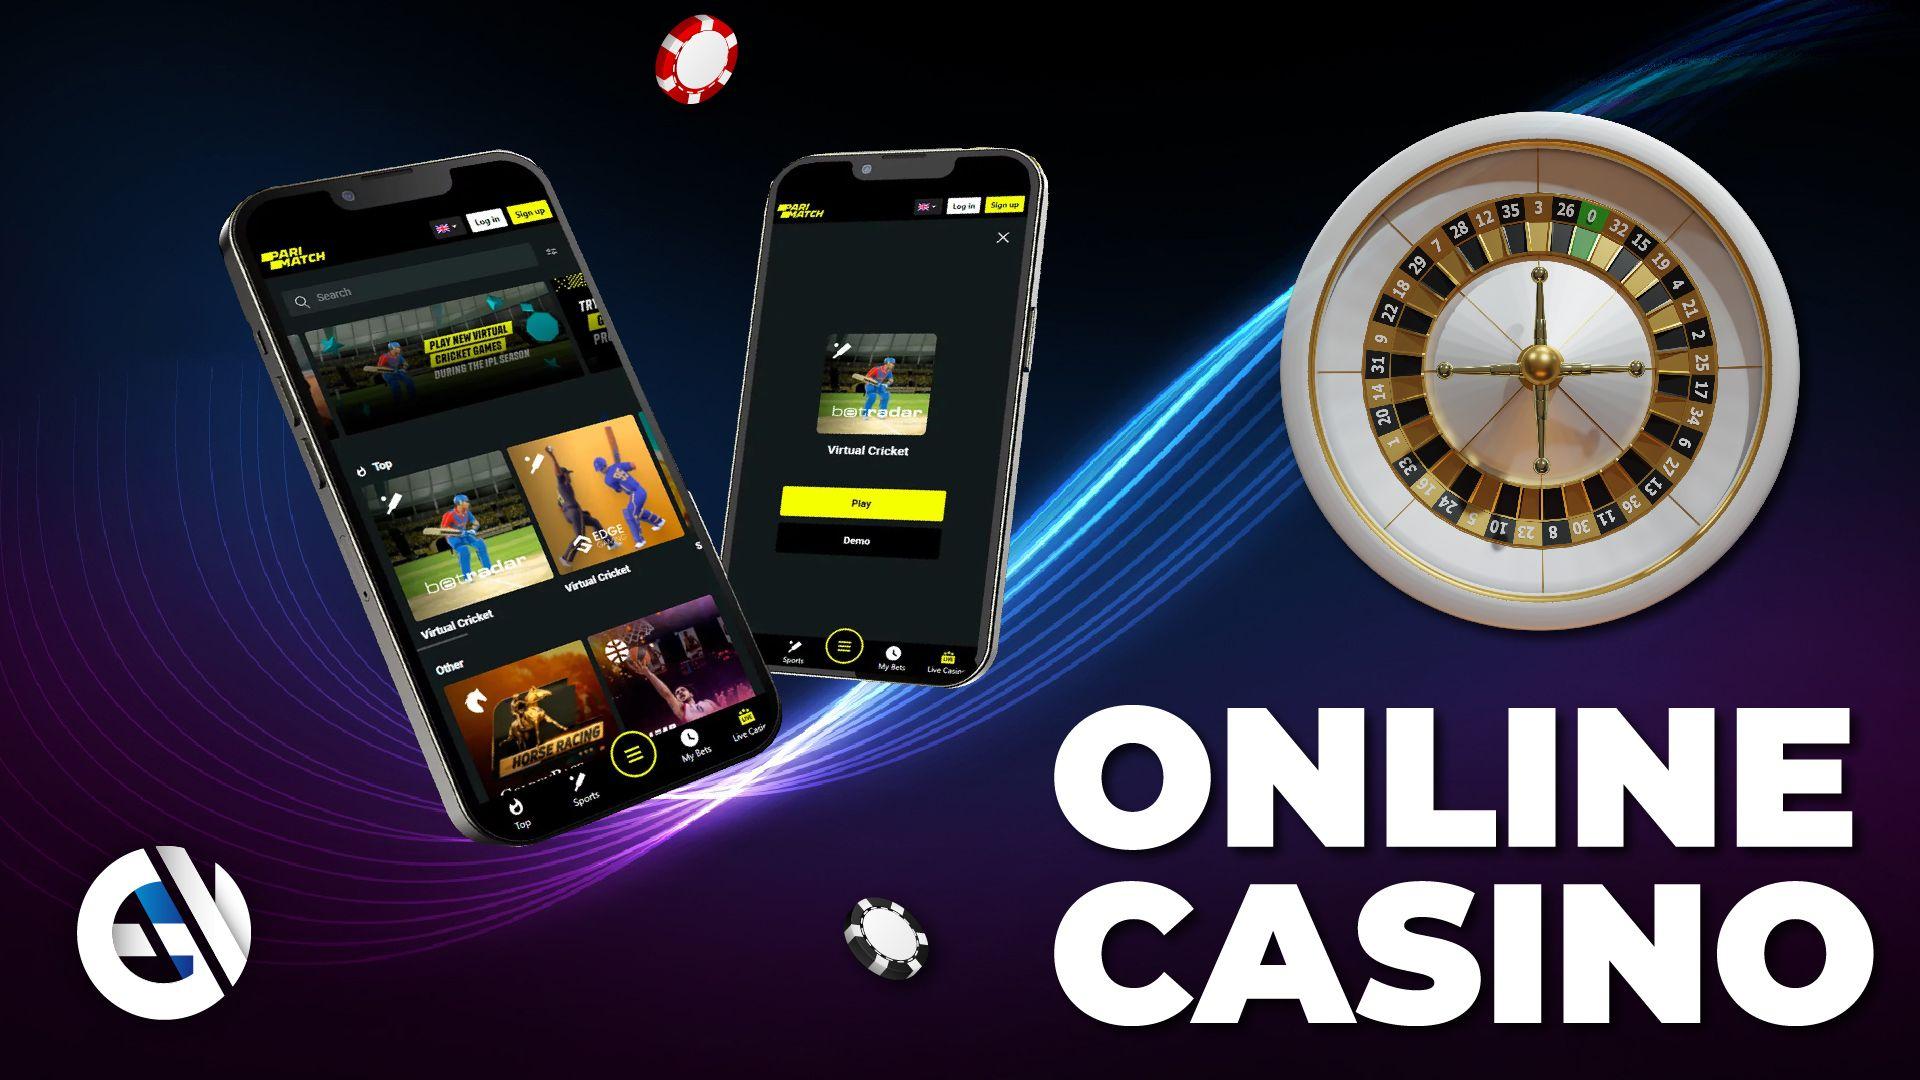 Преимущества входа в онлайн казино Париматч через приложение и преимущества правильной регистрации